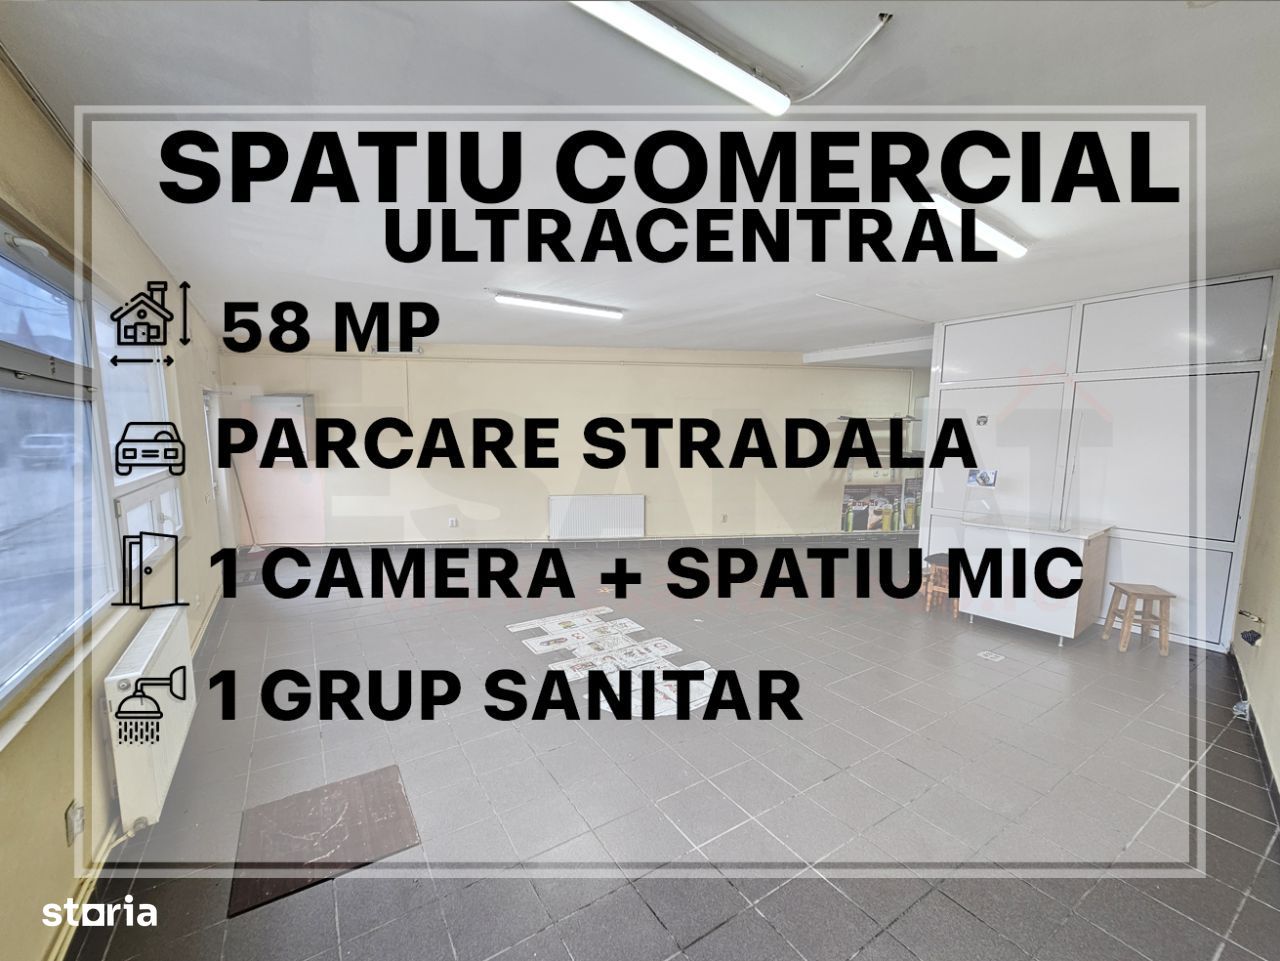 Spatiu Comercial Ultracentral, 58 mp, stradal, vitrina mare |VIDEO